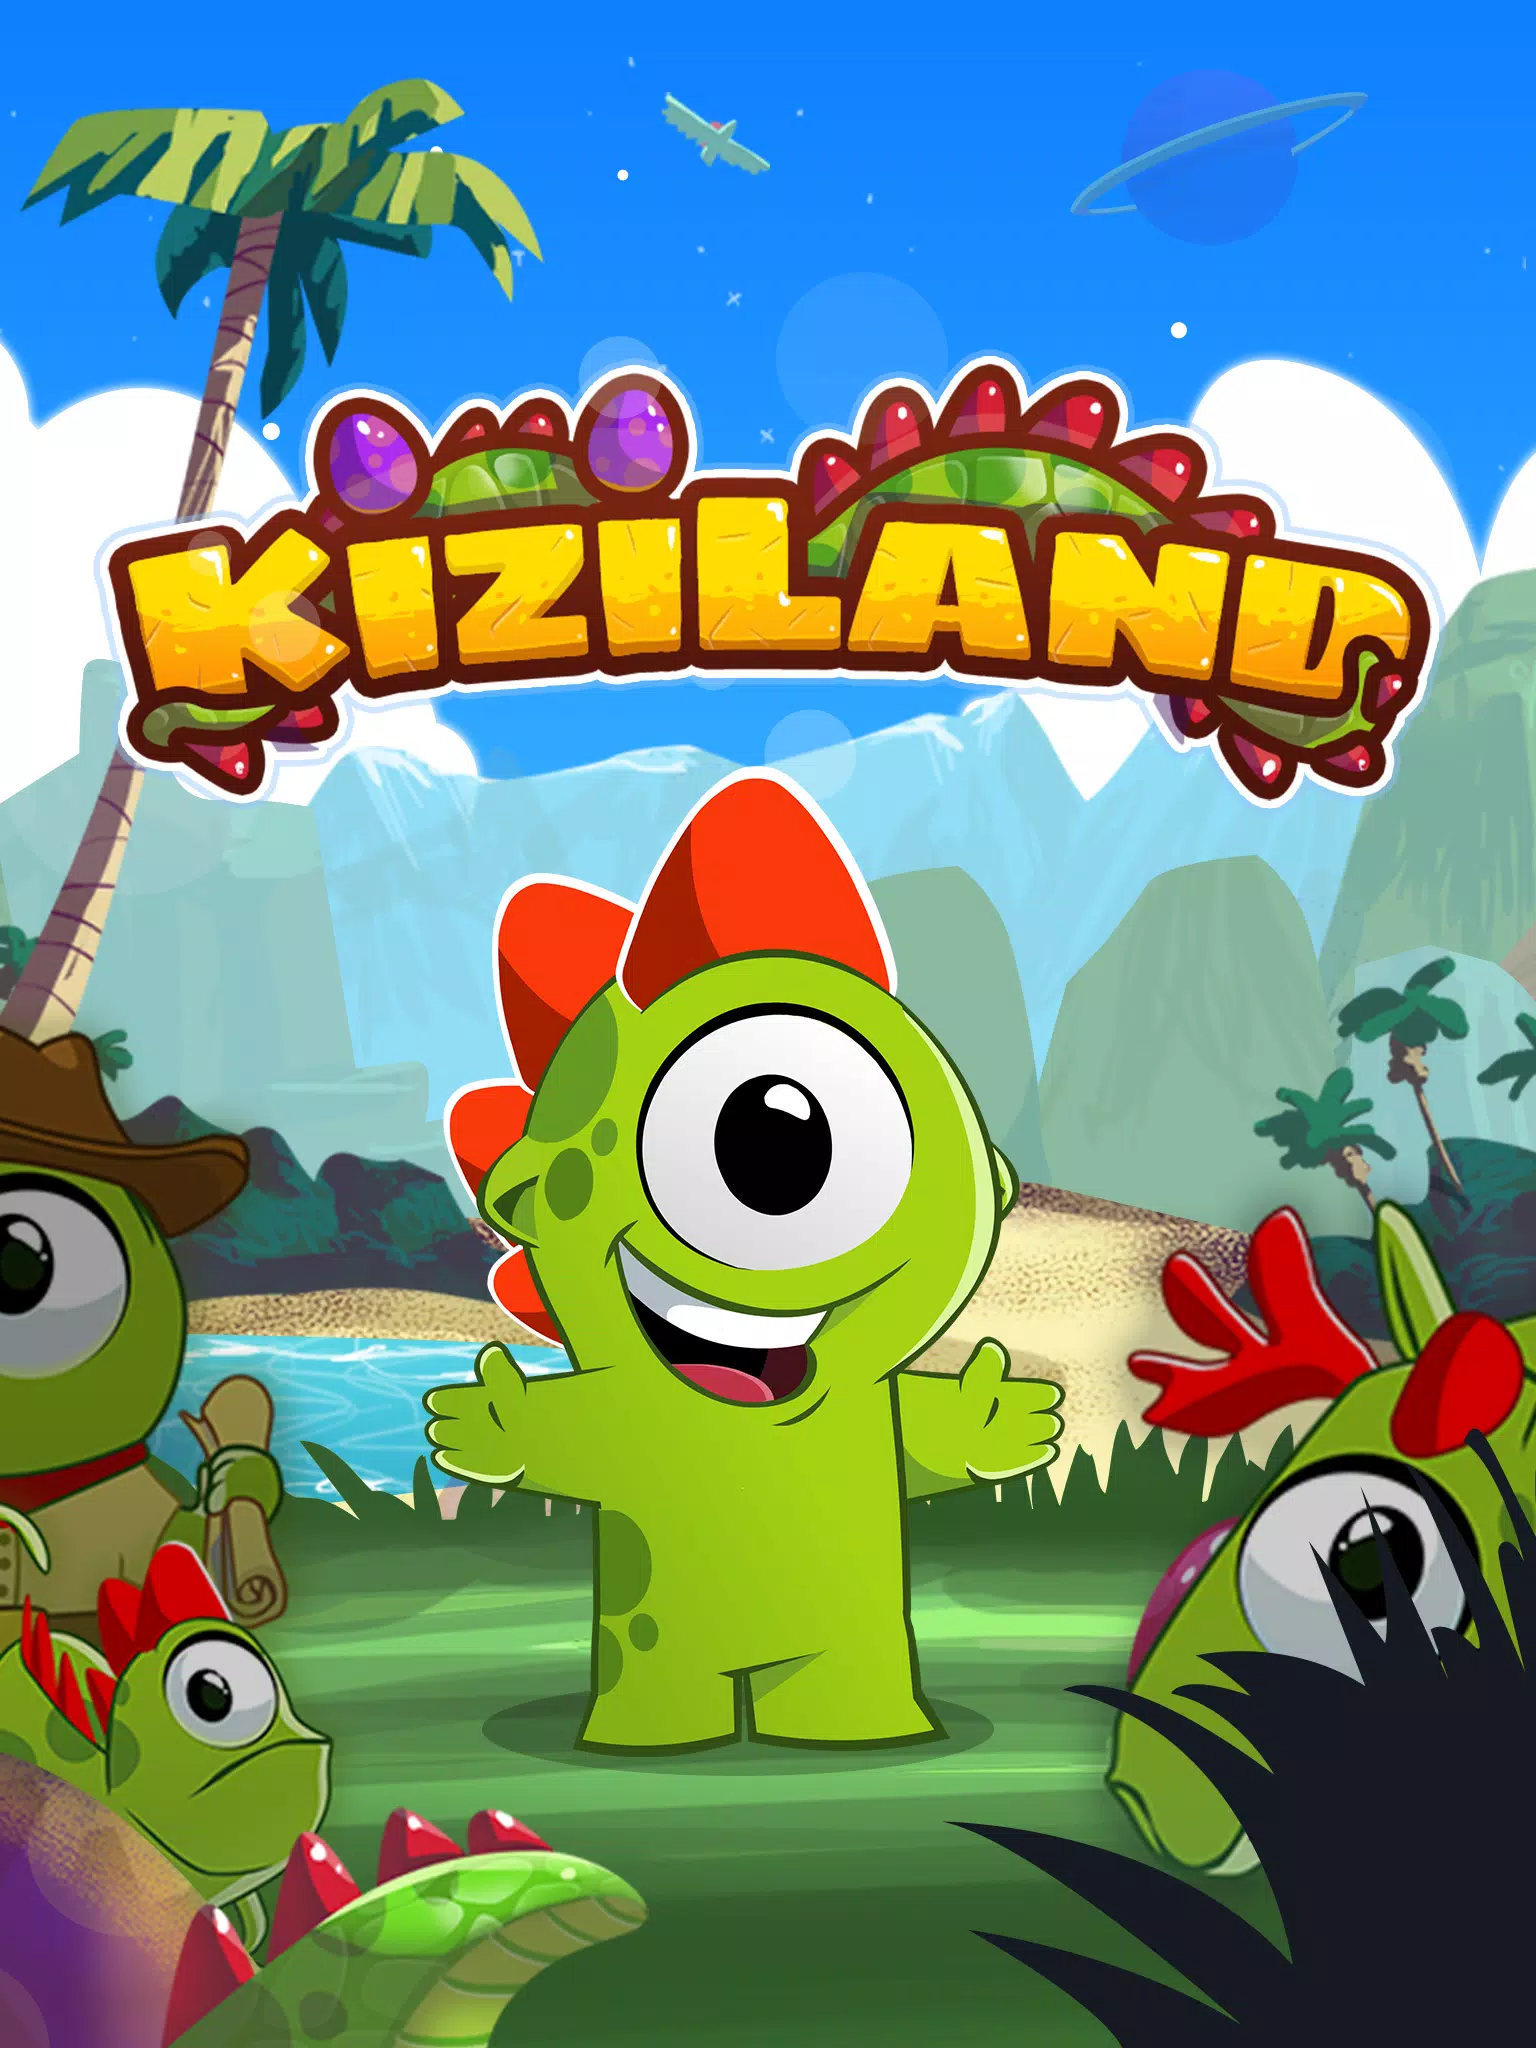 Kizi Games - Dev Games - Kizi Games